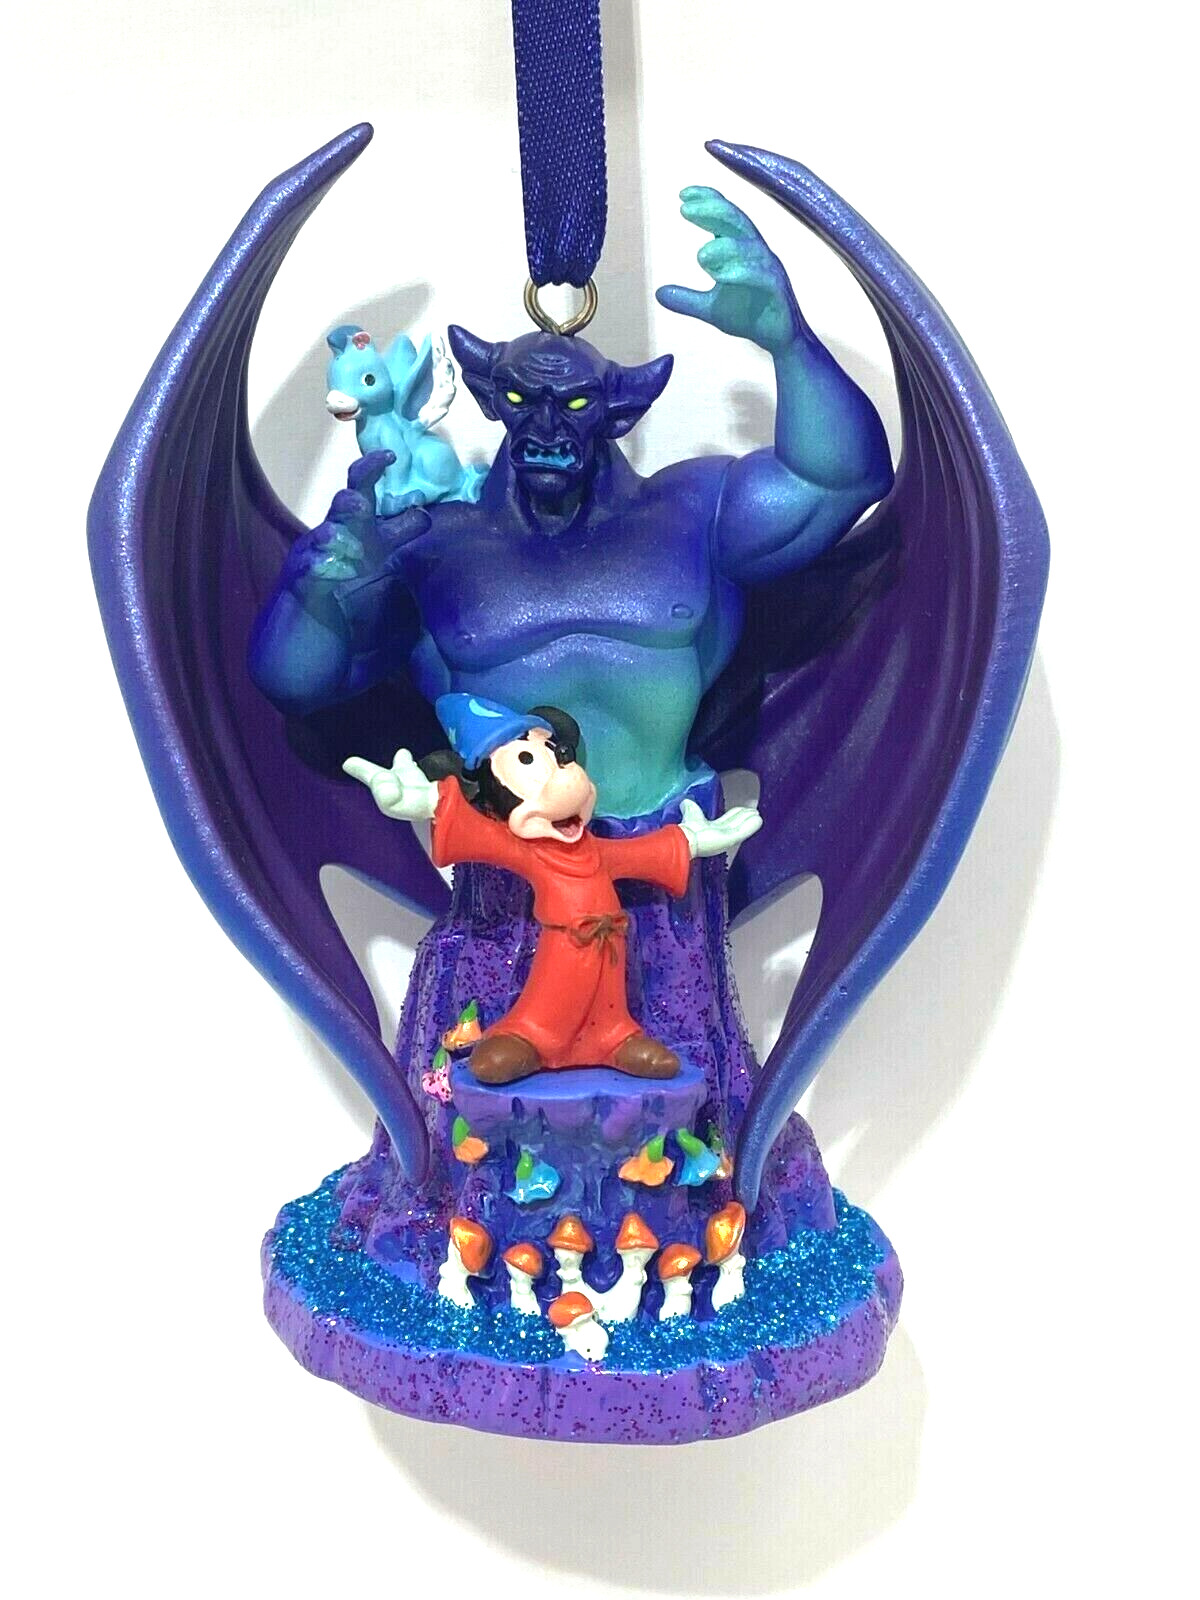 Walt Disney Fantasia Chernabog Sorcerer Mickey Mouse Hop Low Pegasus Ornament